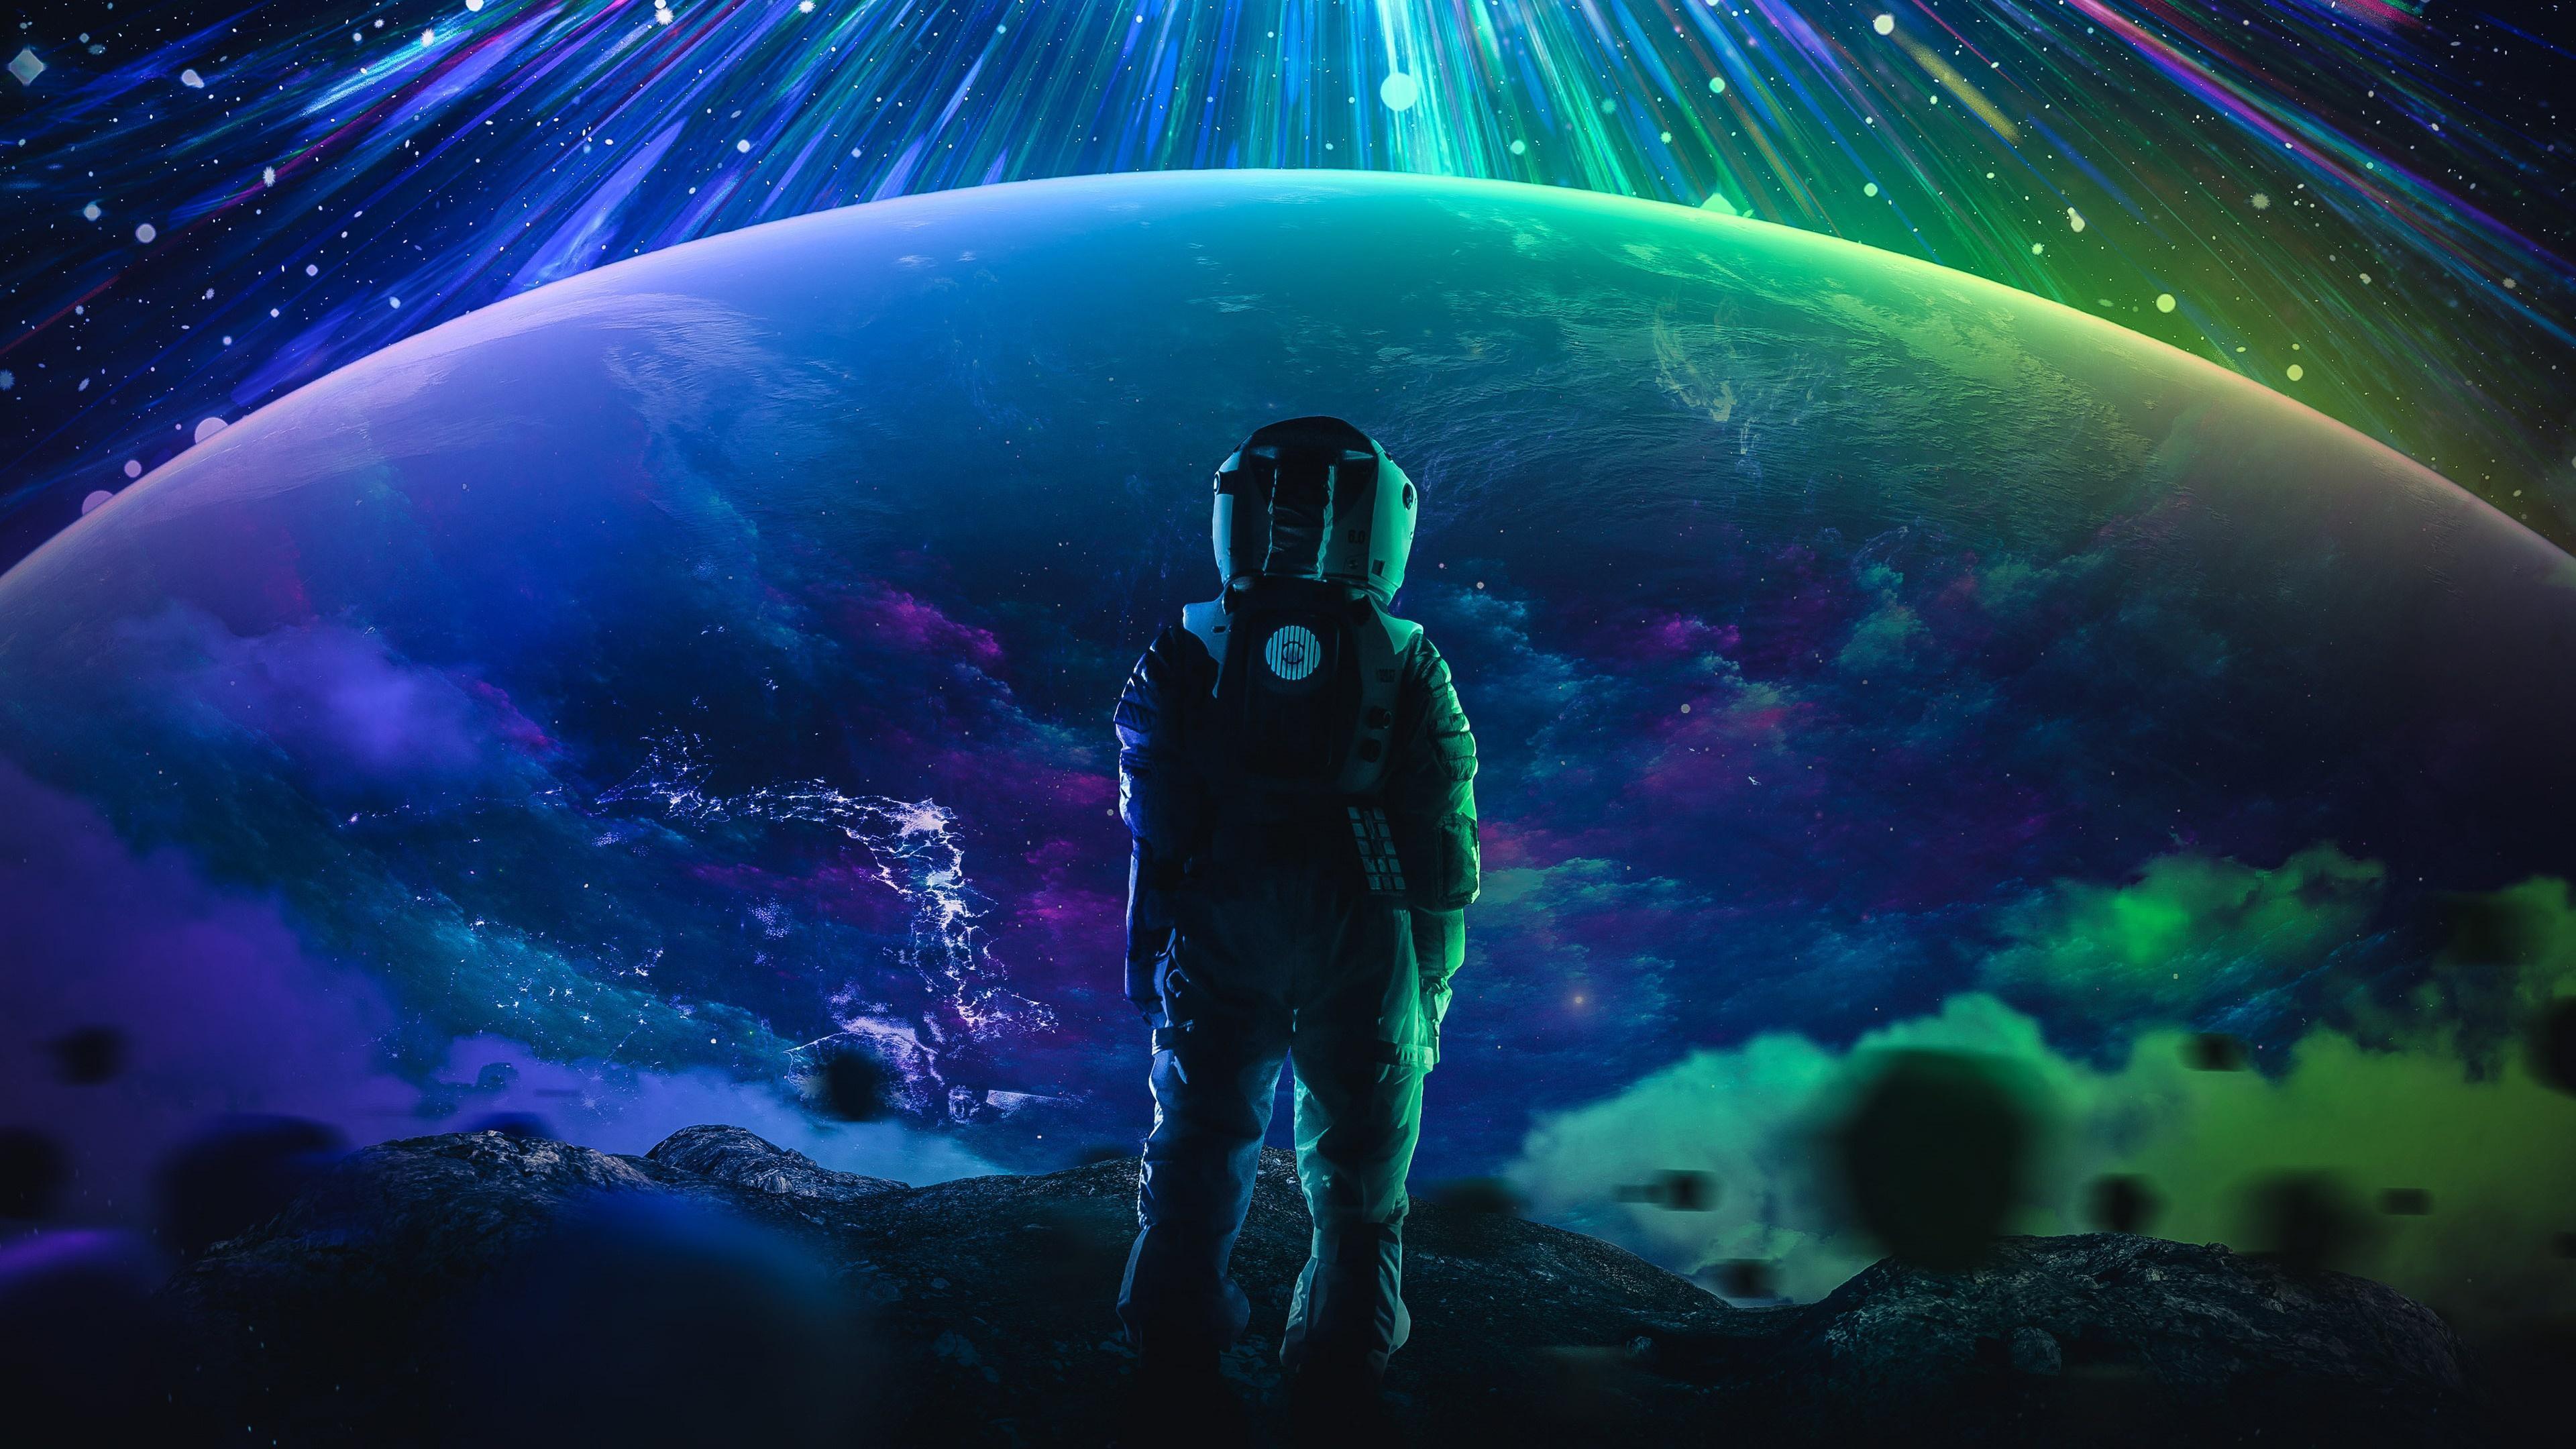 HD wallpaper, Digital Art, 4K, Cosmos, Stars, Astronaut, Planet, Space